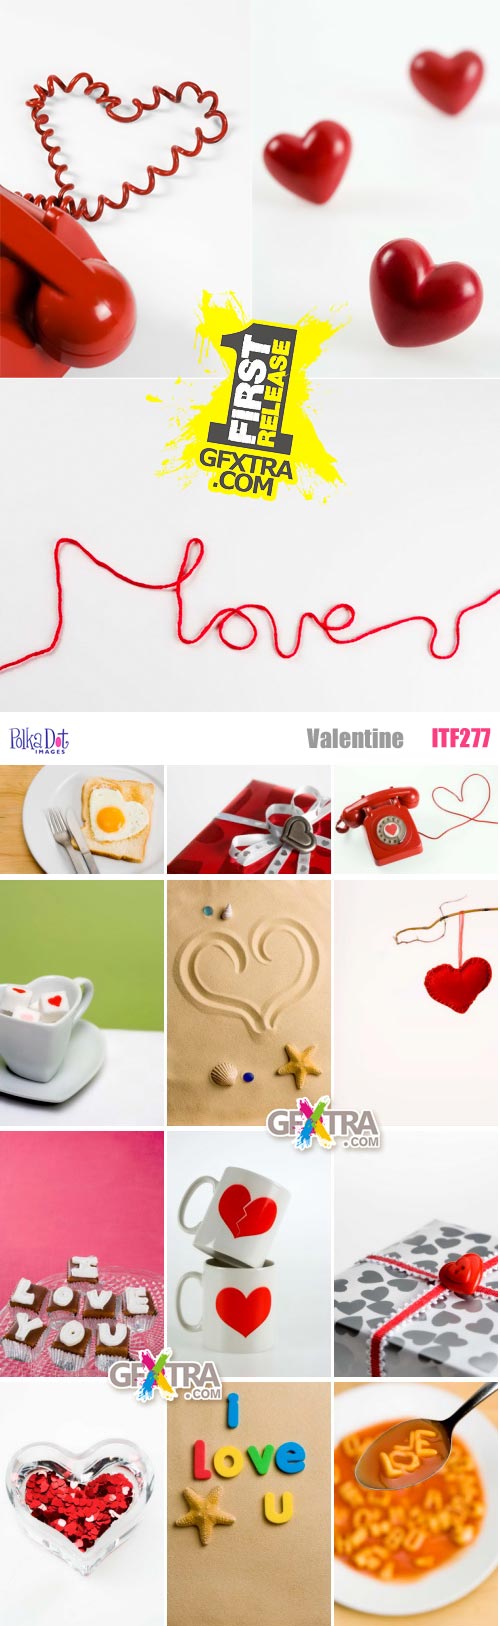 Polka Dot Images ITF277 Valentine